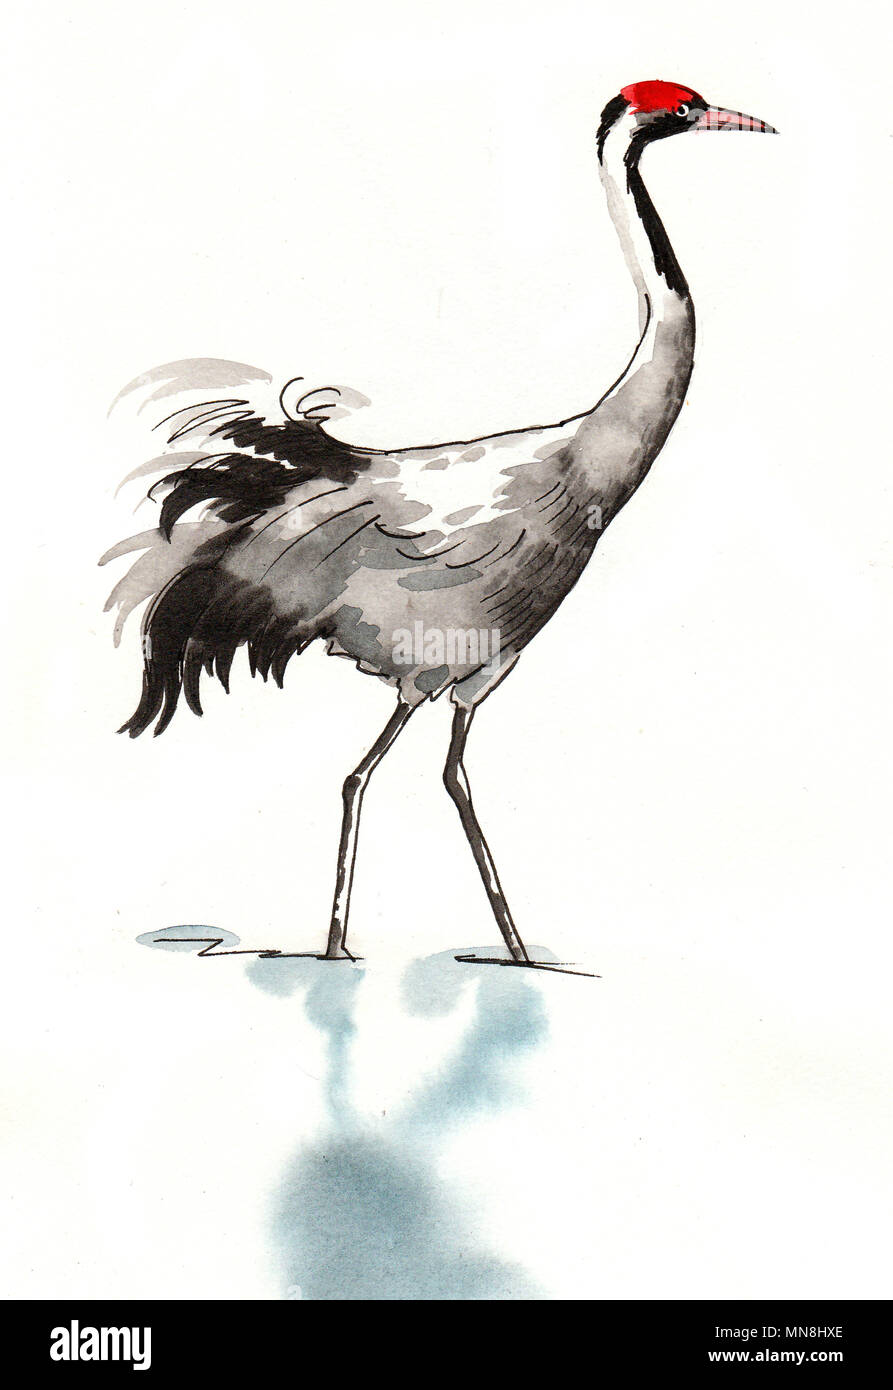 8100 Crane Bird Illustrations RoyaltyFree Vector Graphics  Clip Art   iStock  Crane bird vector Crane bird silhouette Crane bird logo